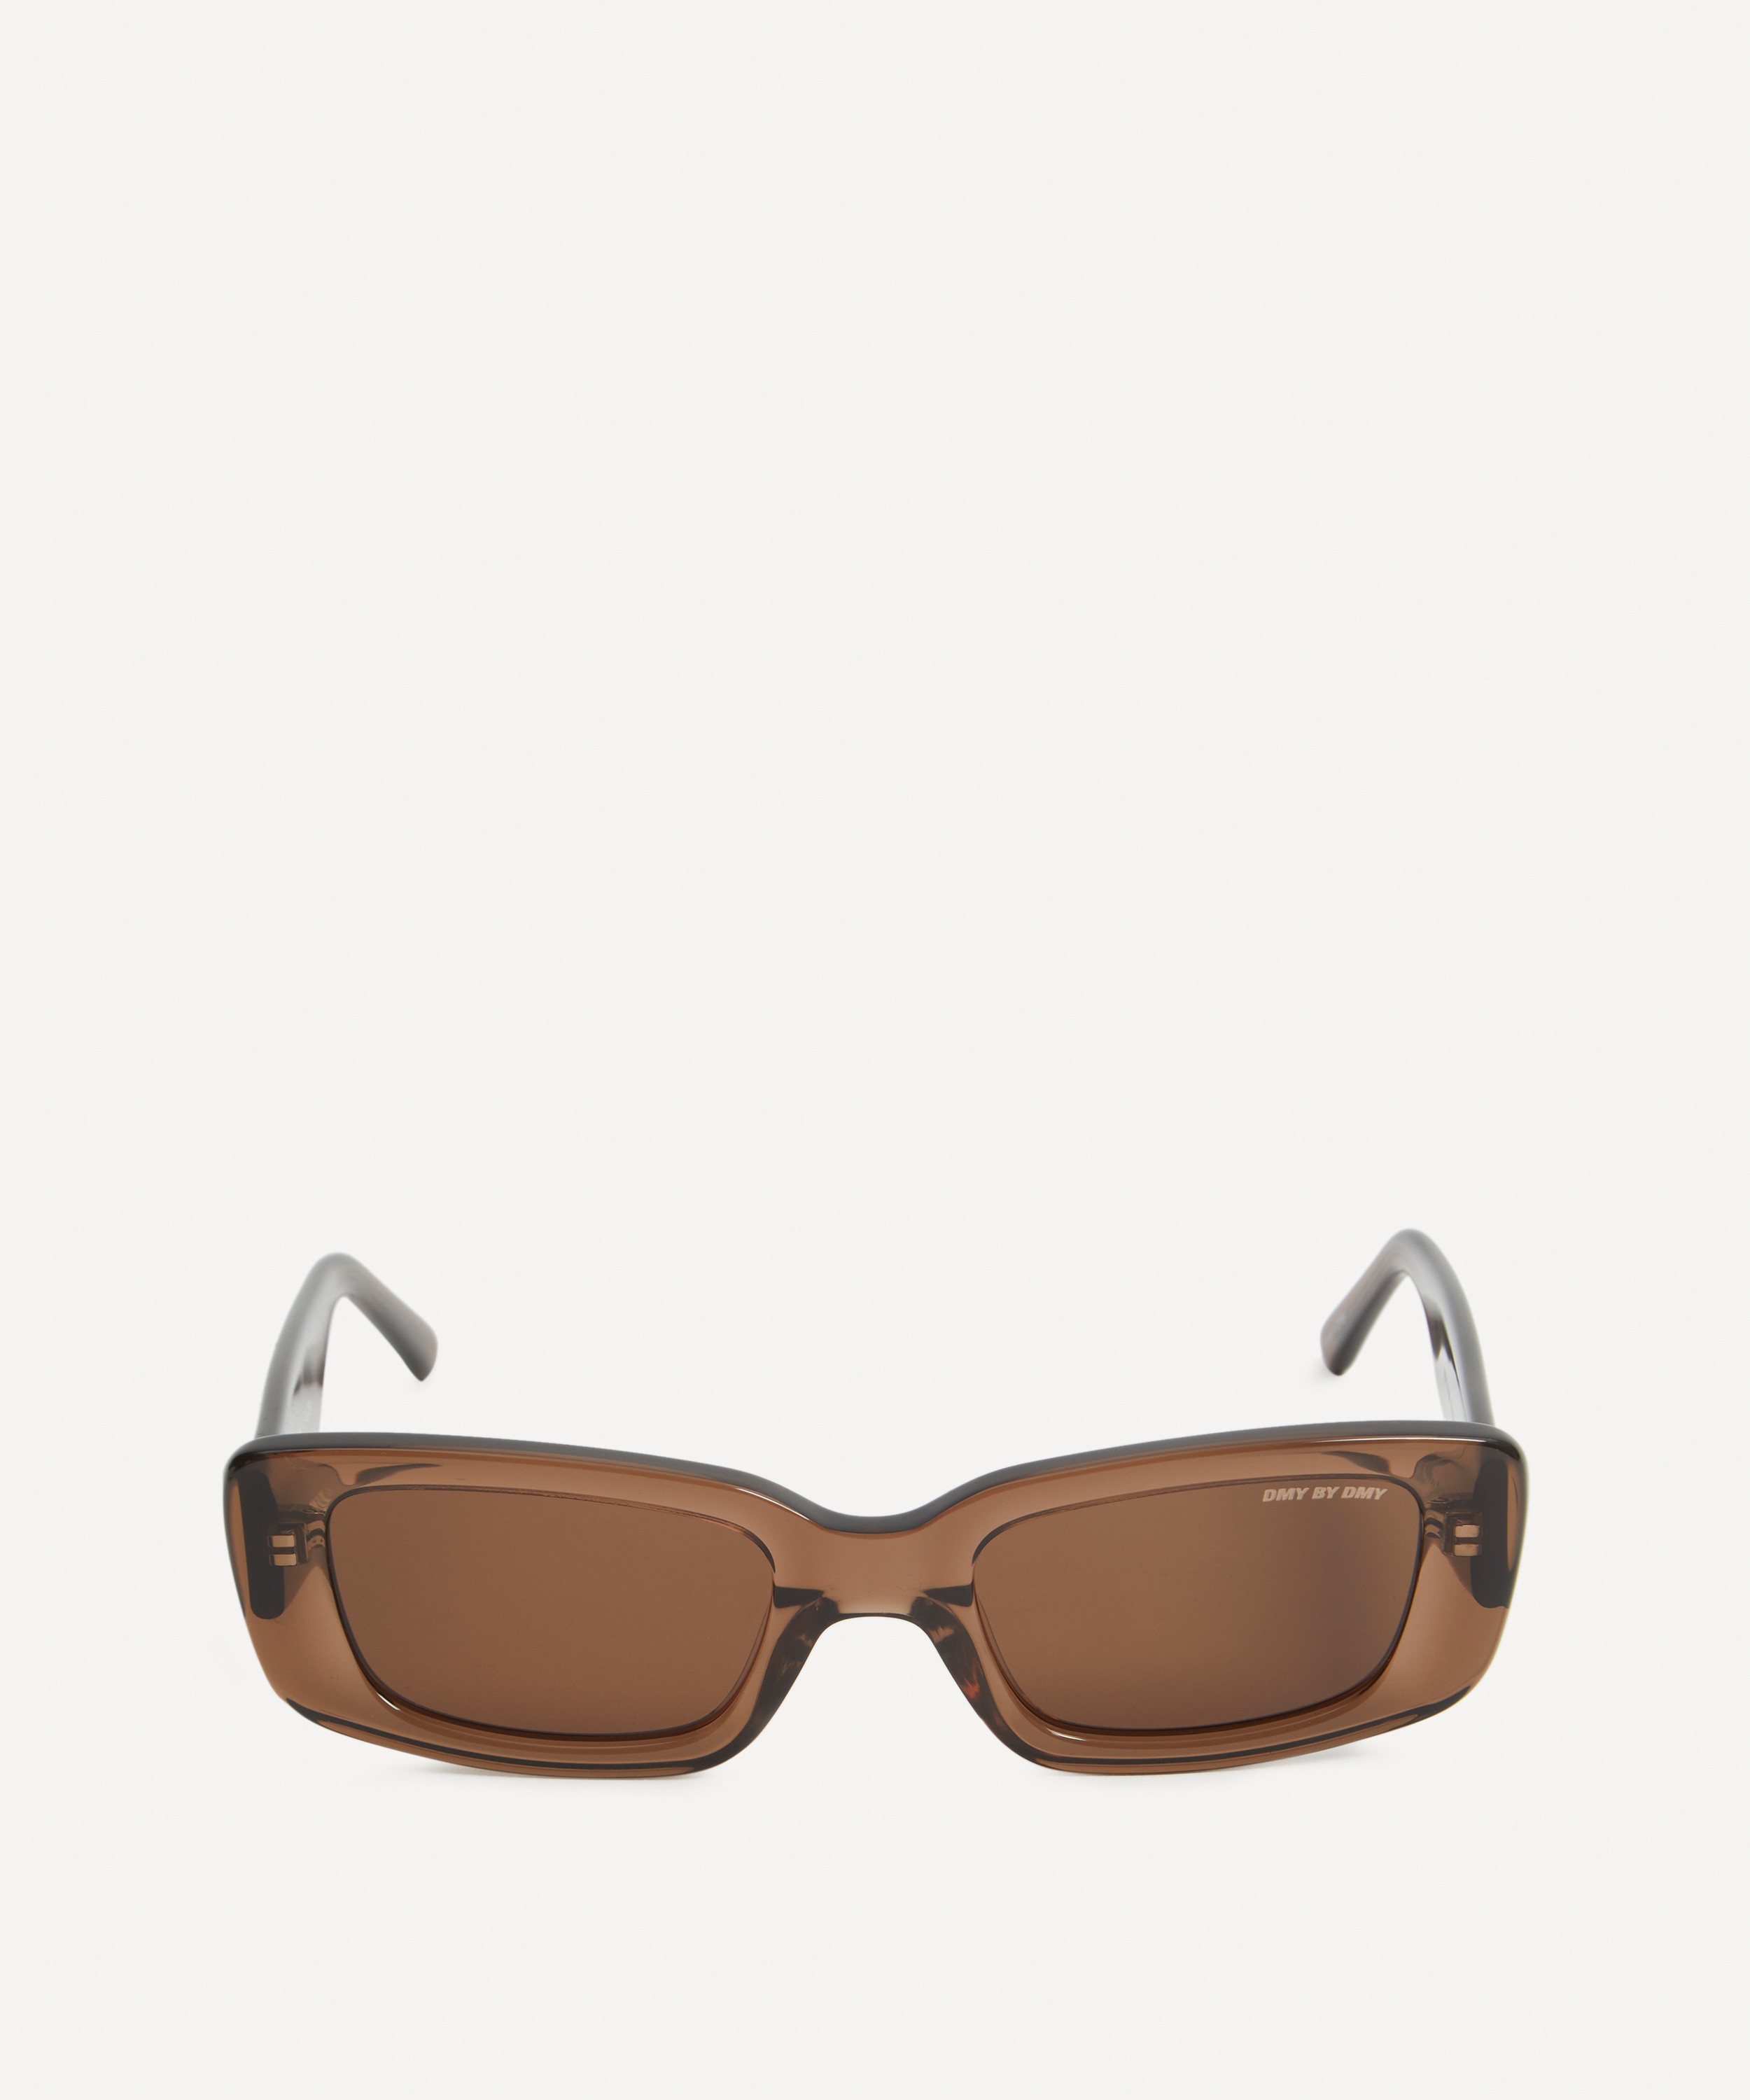 DMY BY DMY - Preston Rectangular Transparent Brown Sunglasses